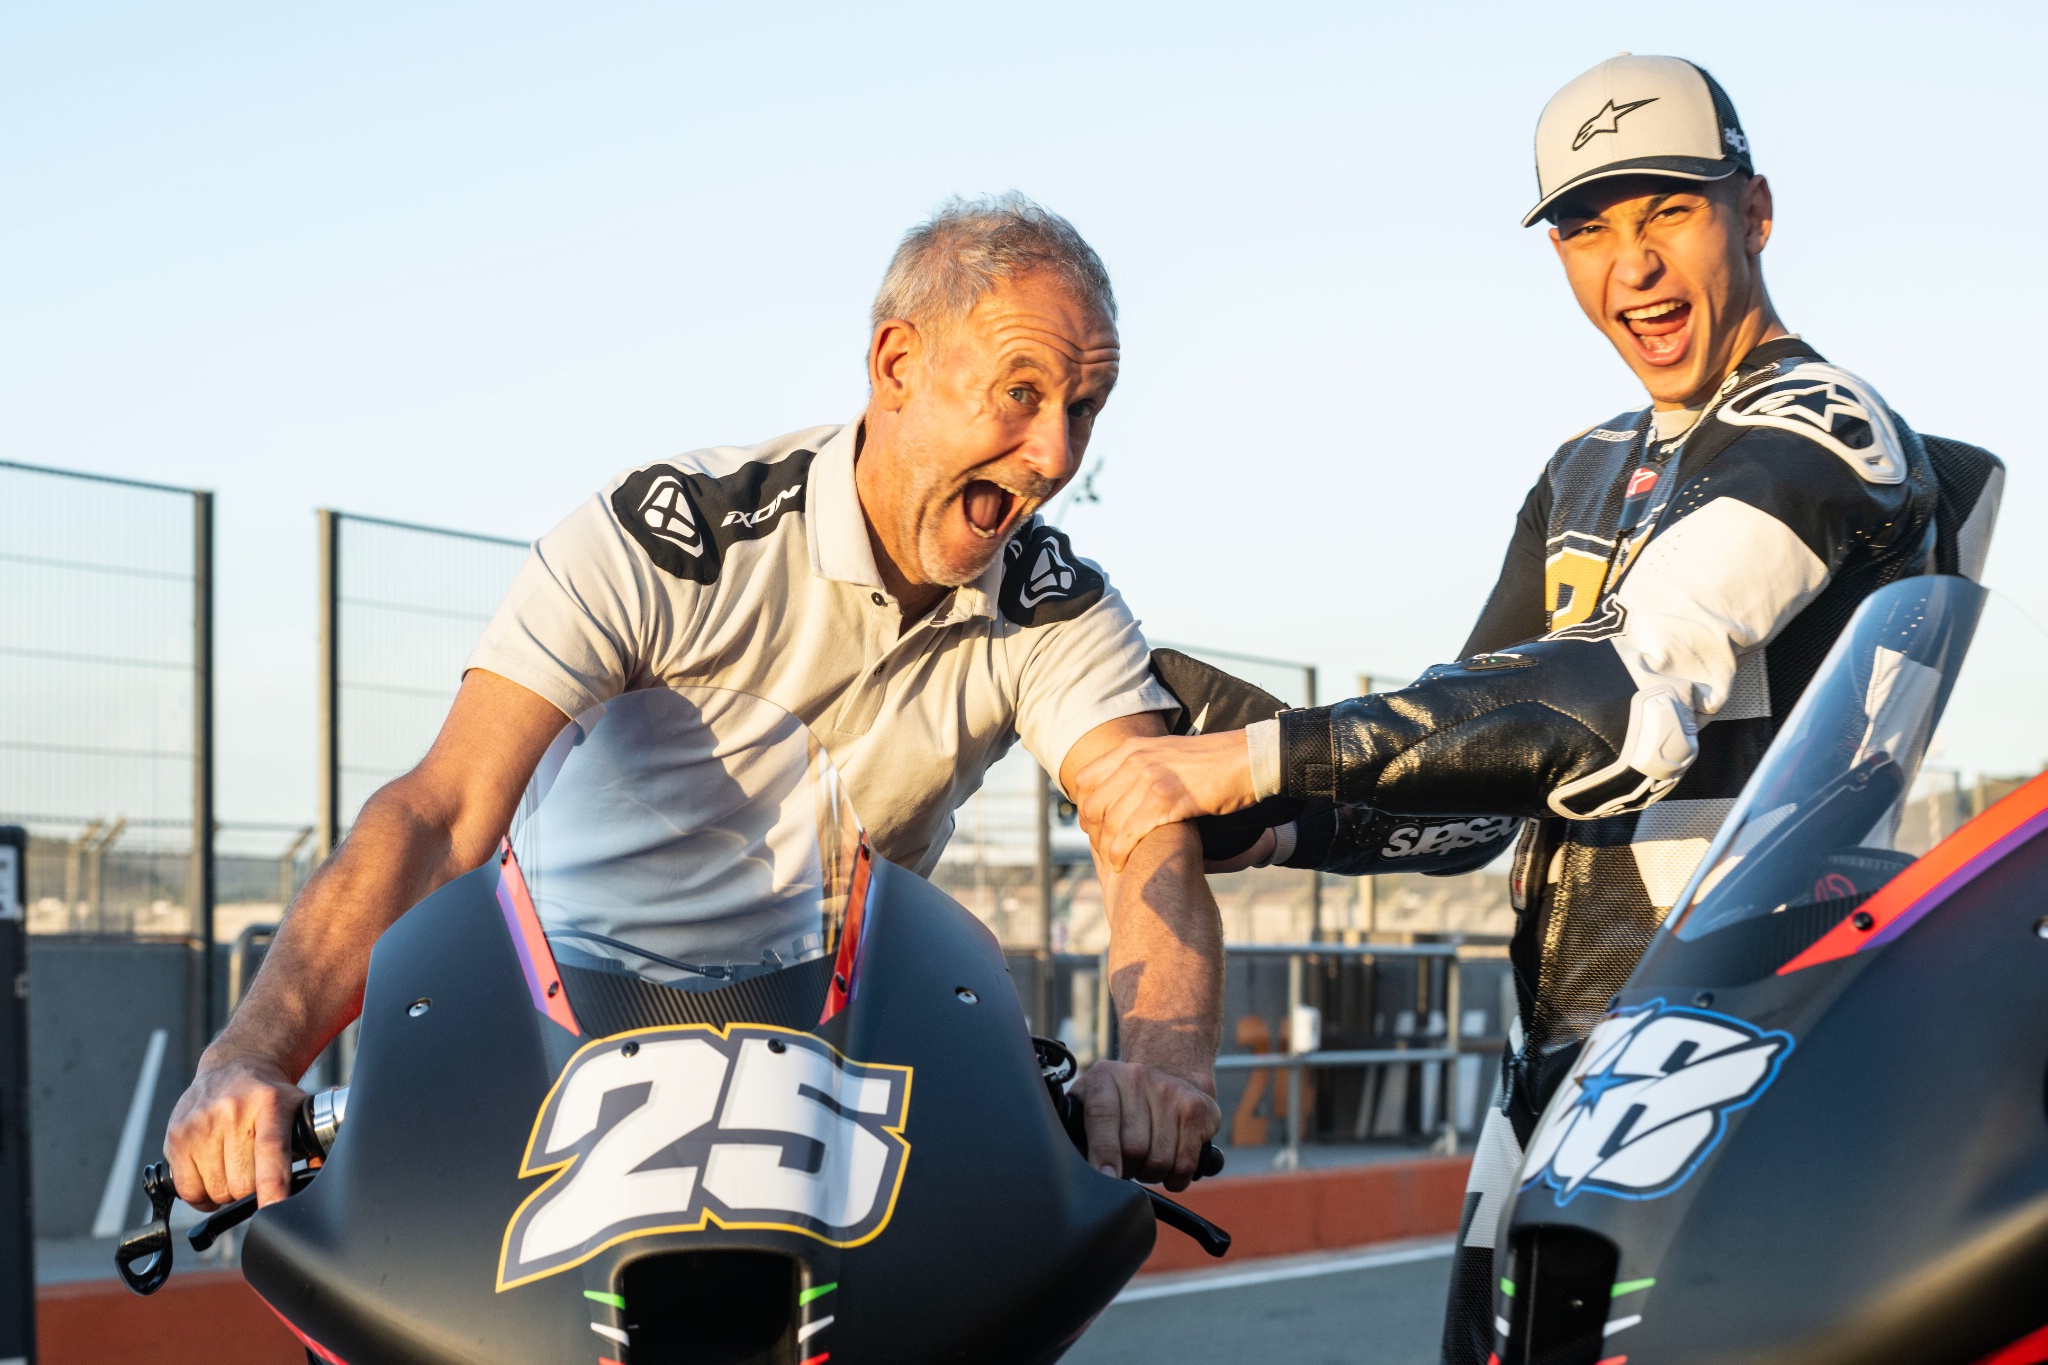 Raul Fernandez, Wilco Zeelenberg, Valencia MotoGP test 07 November